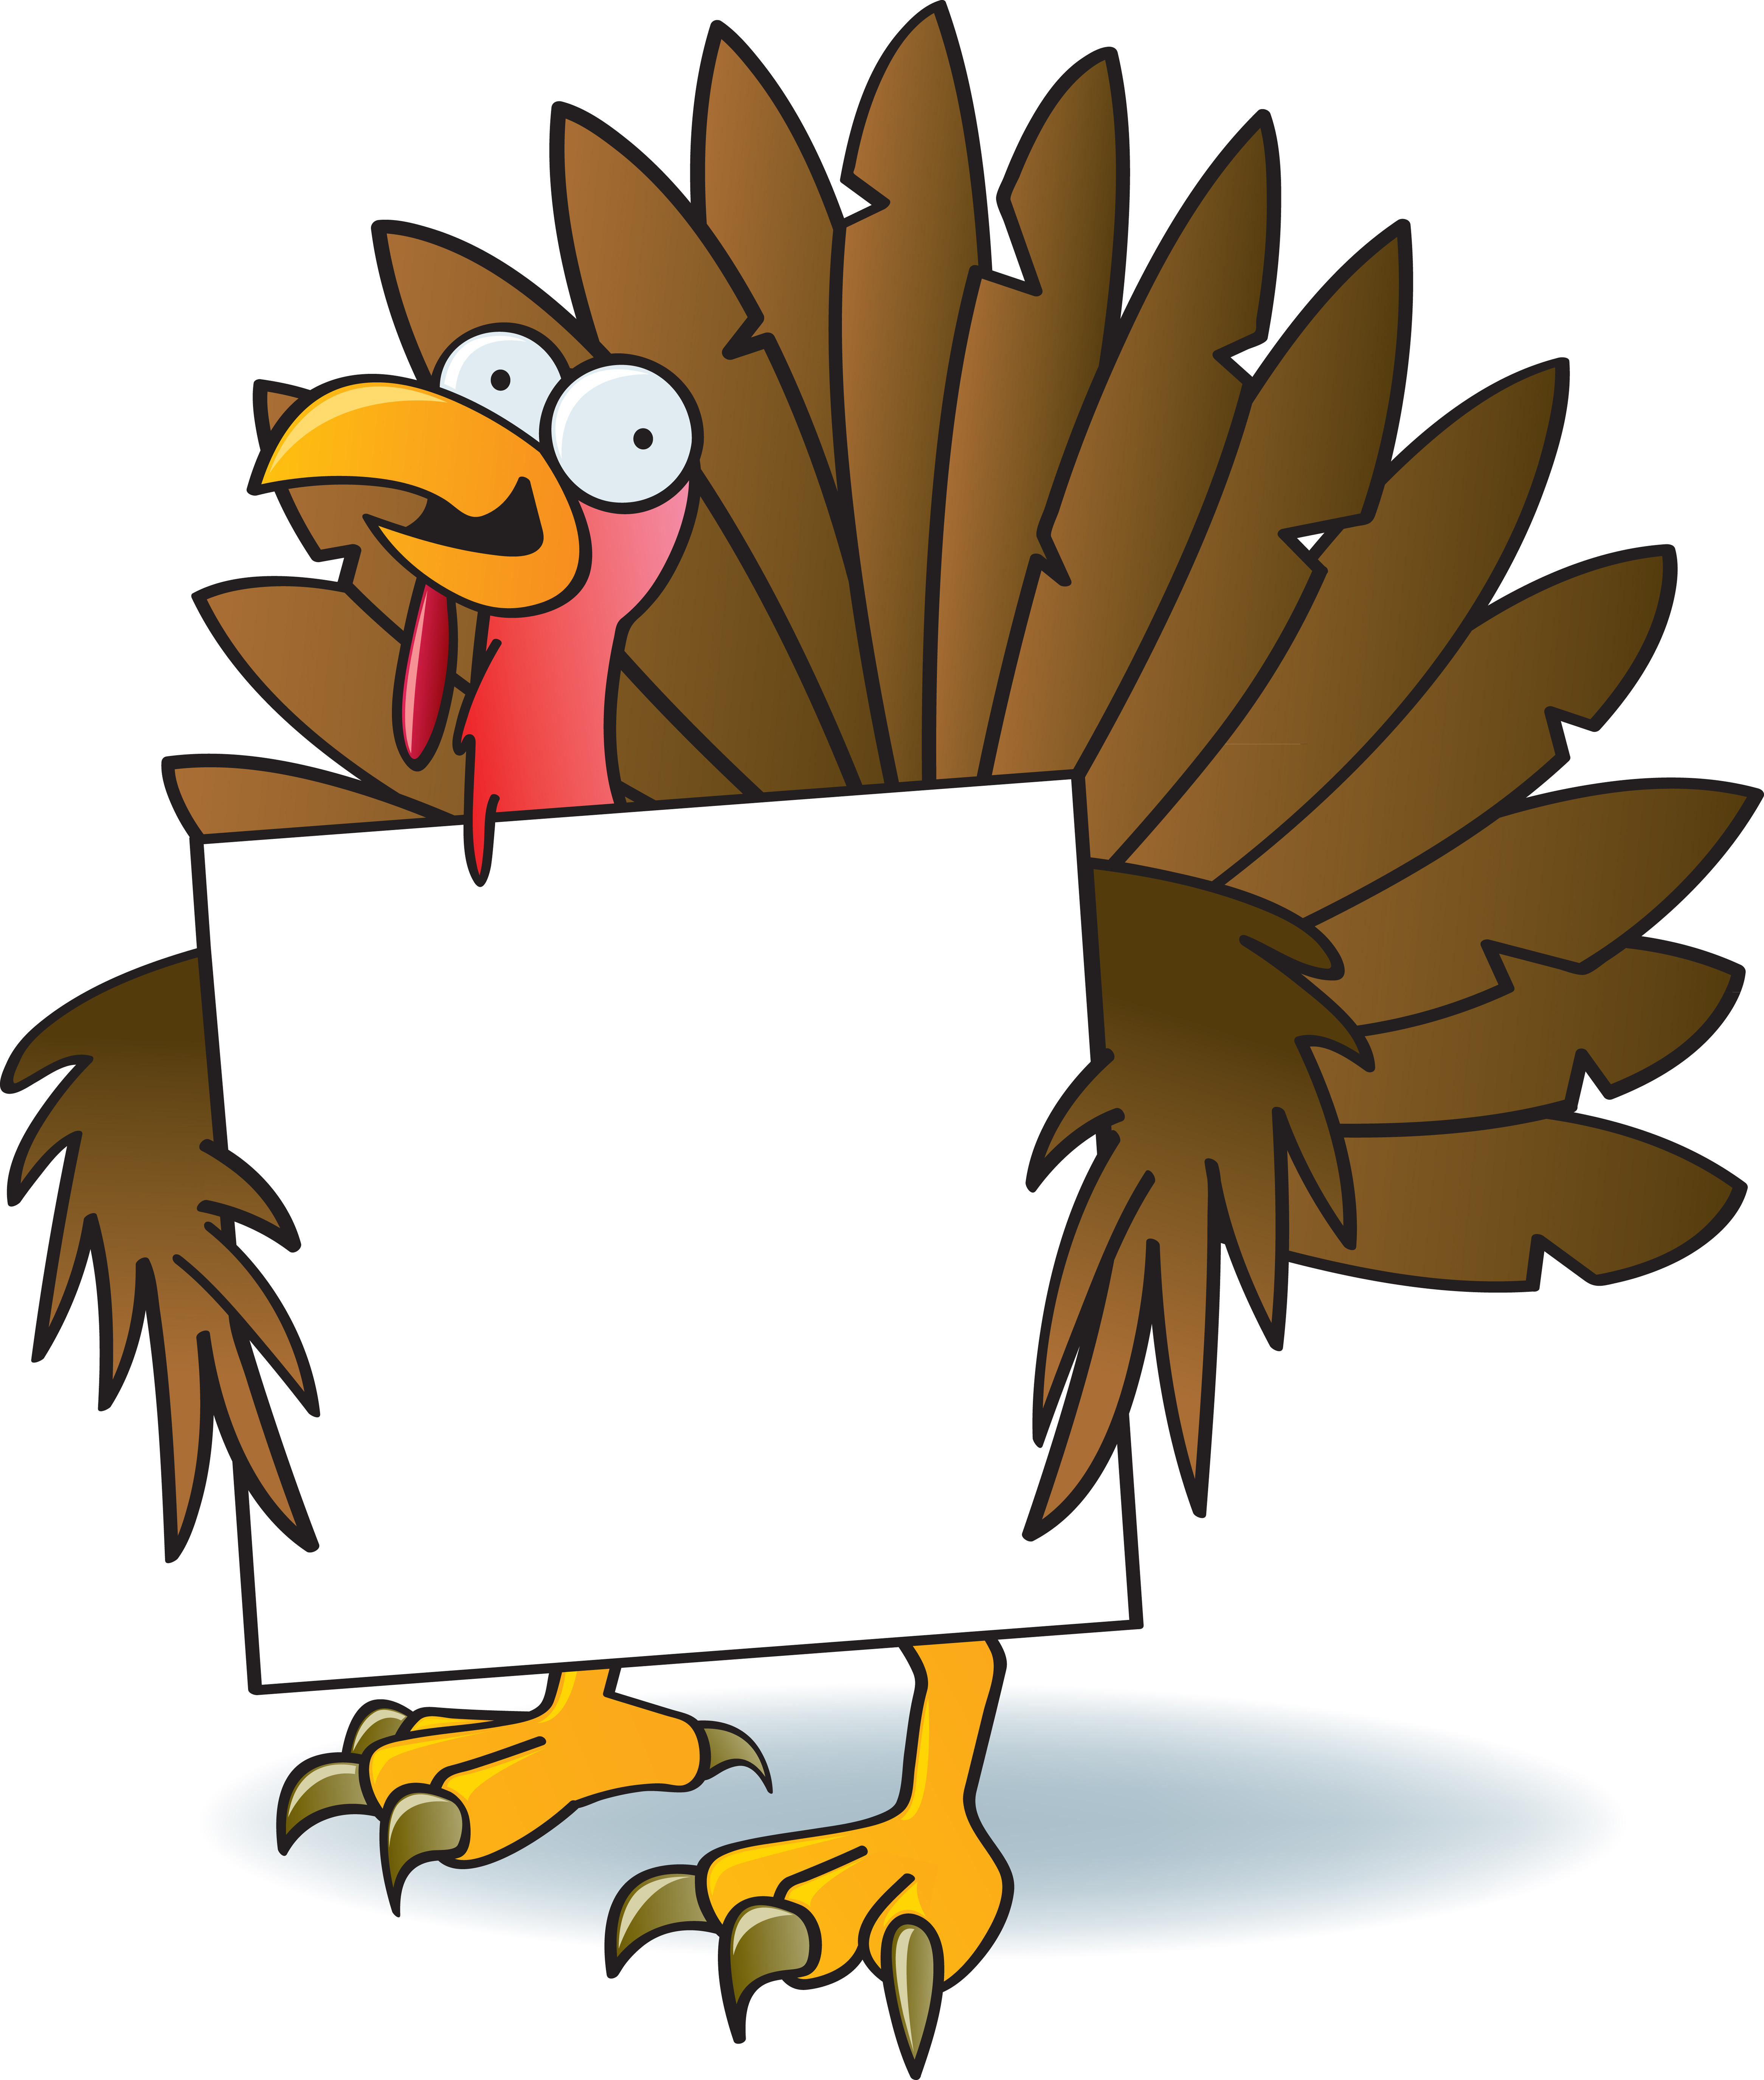 Thanksgiving Turkey Cartoon
 Illustration Vector by Jamie Slavy at Coroflot